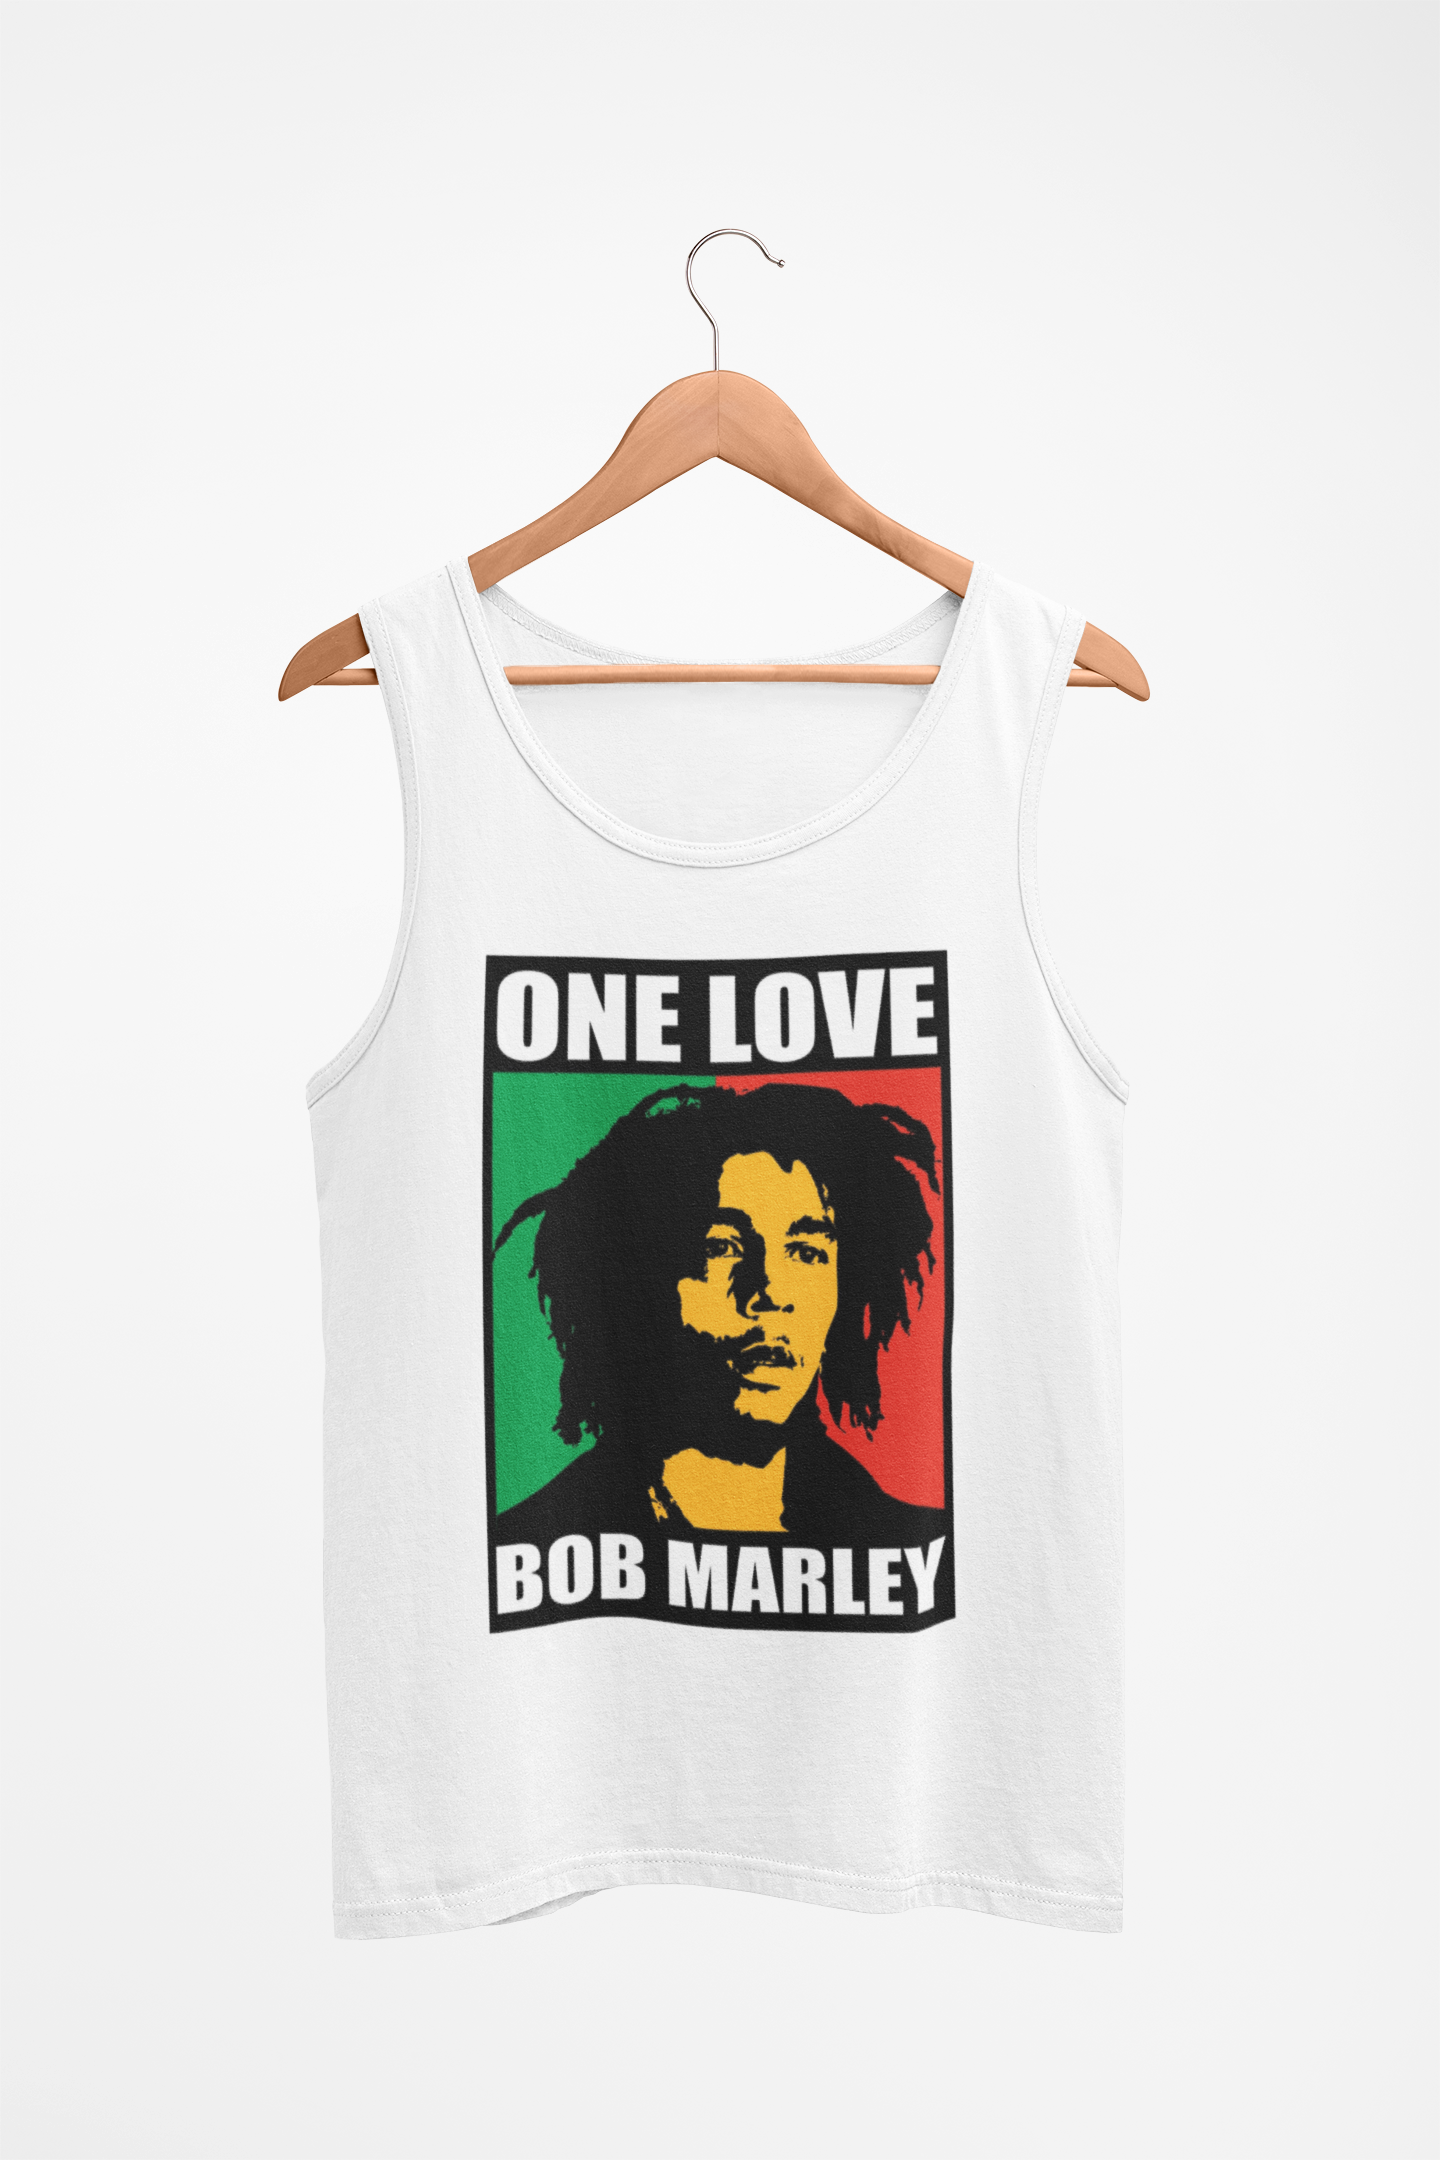 Bob Marley "One Love" Pop Art